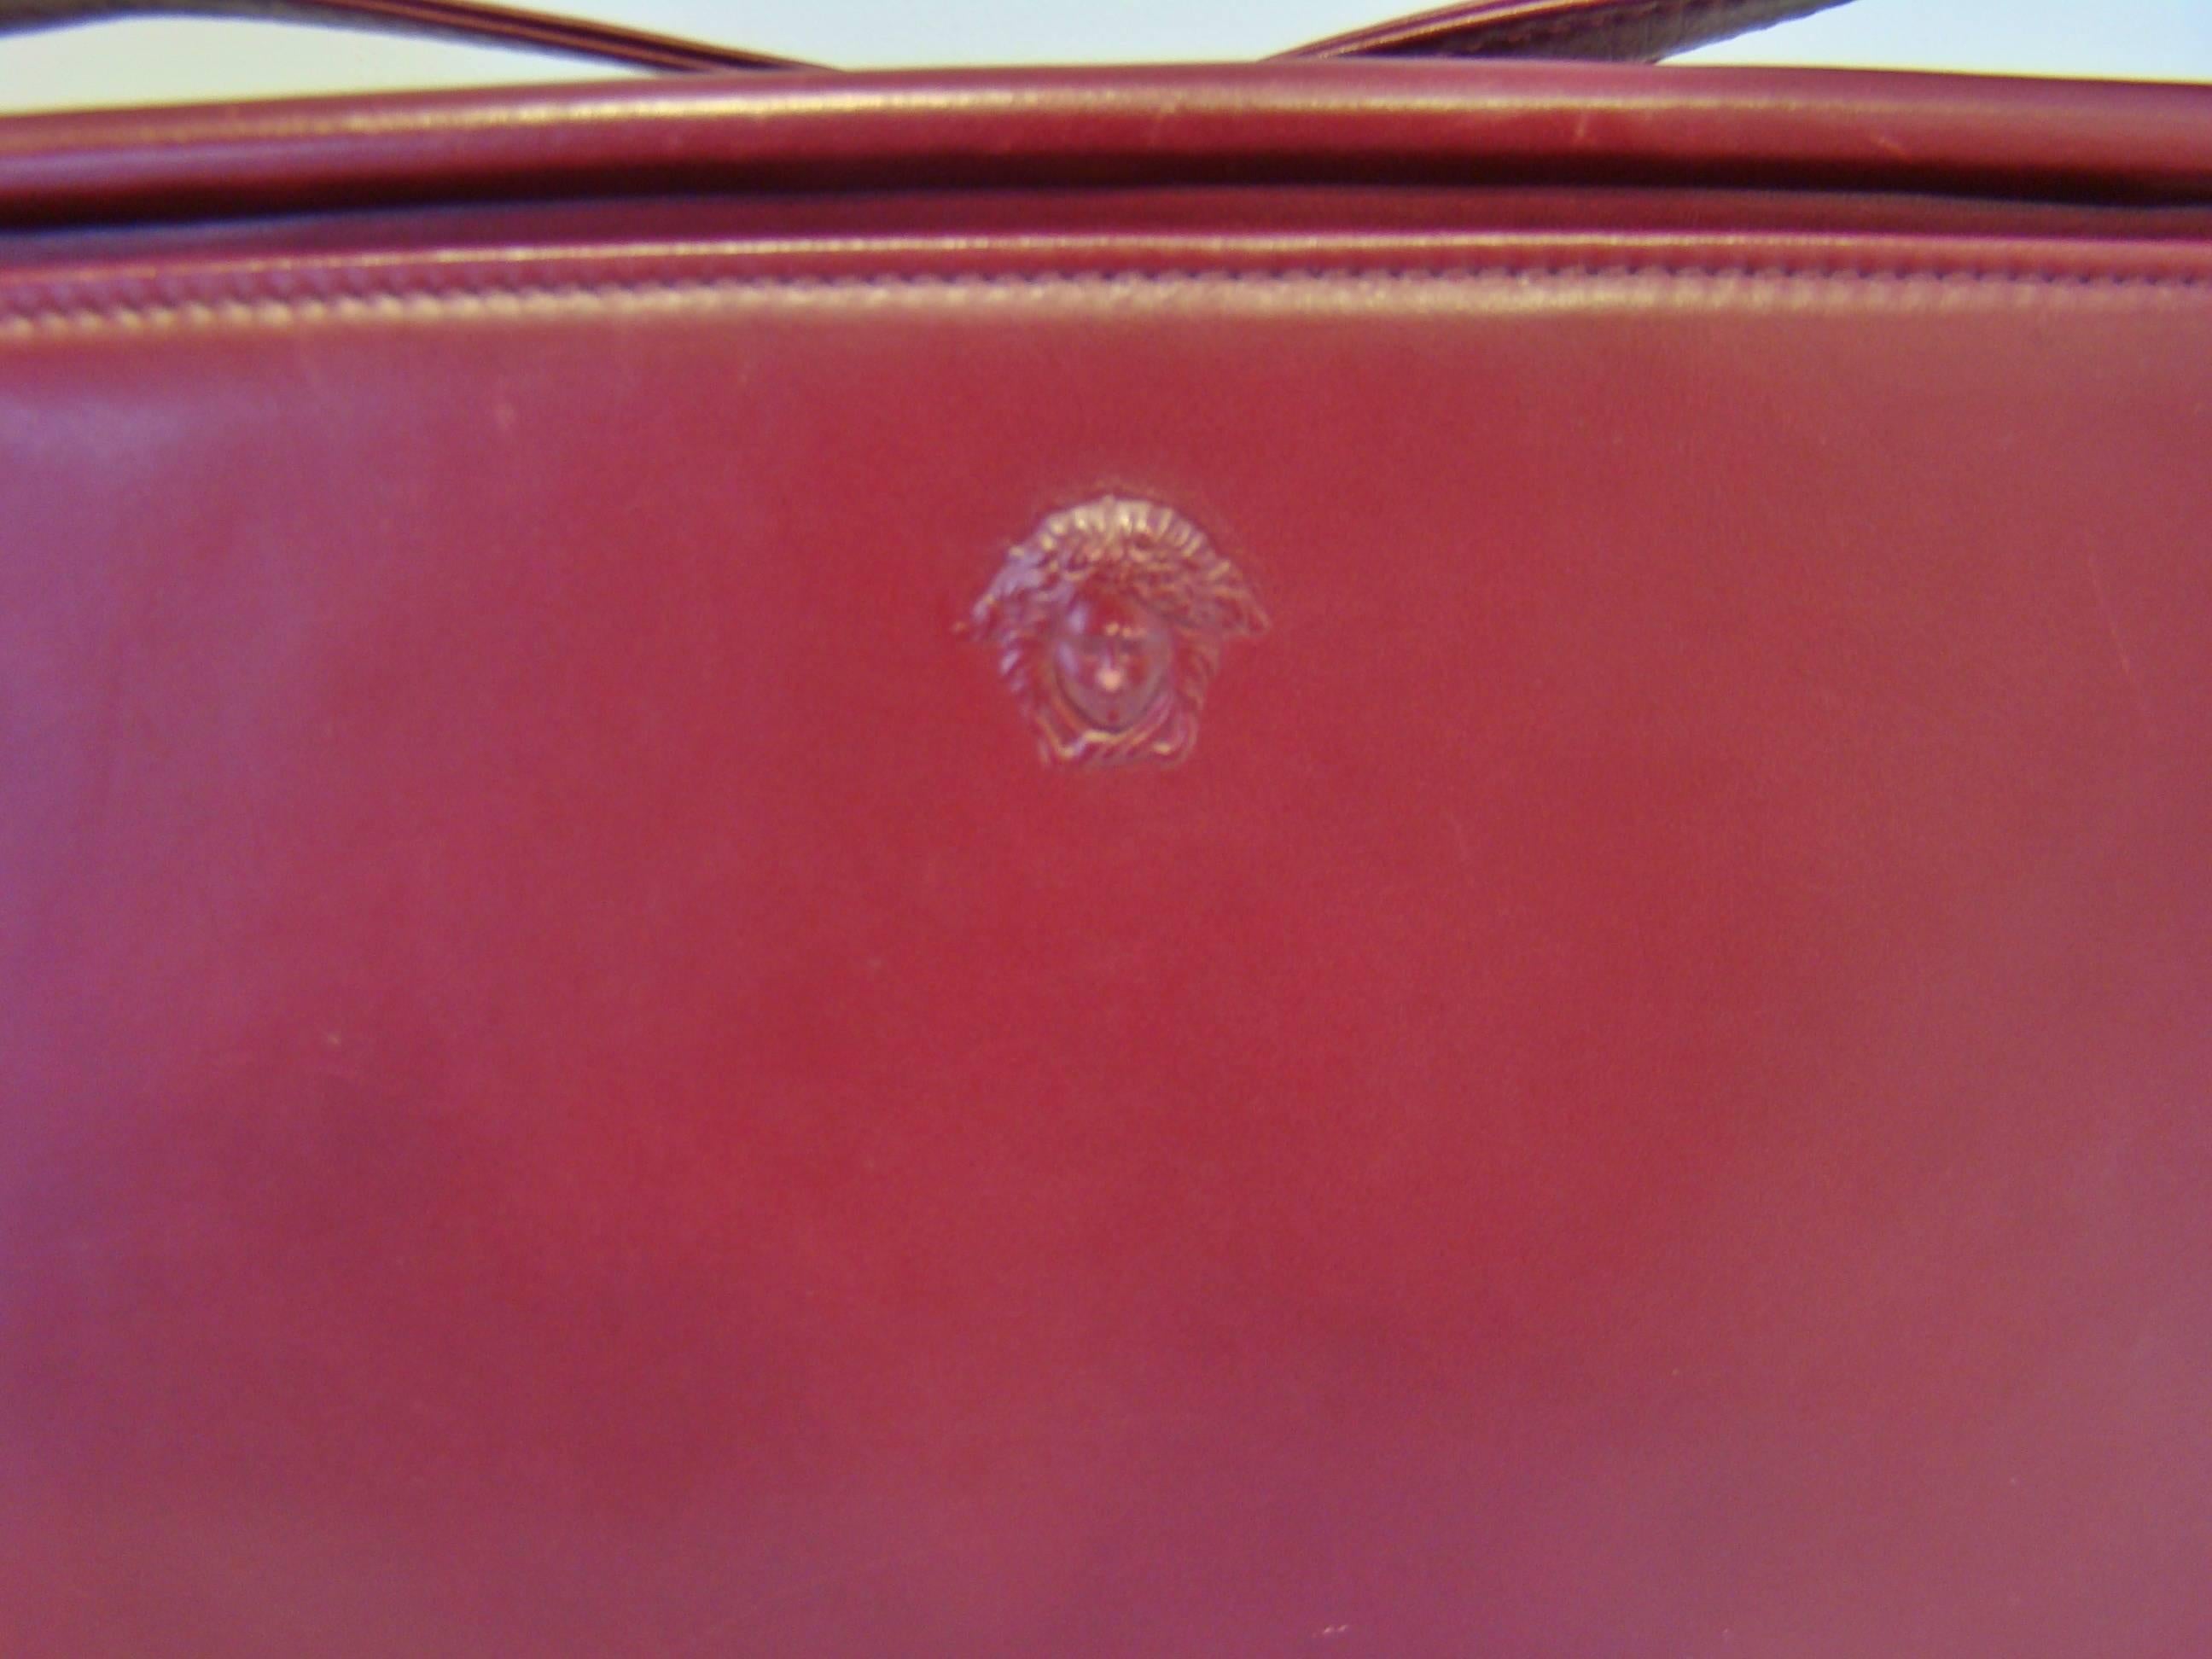 Brown Gianni Versace Bordeaux Leather Shoulder Bag For Sale